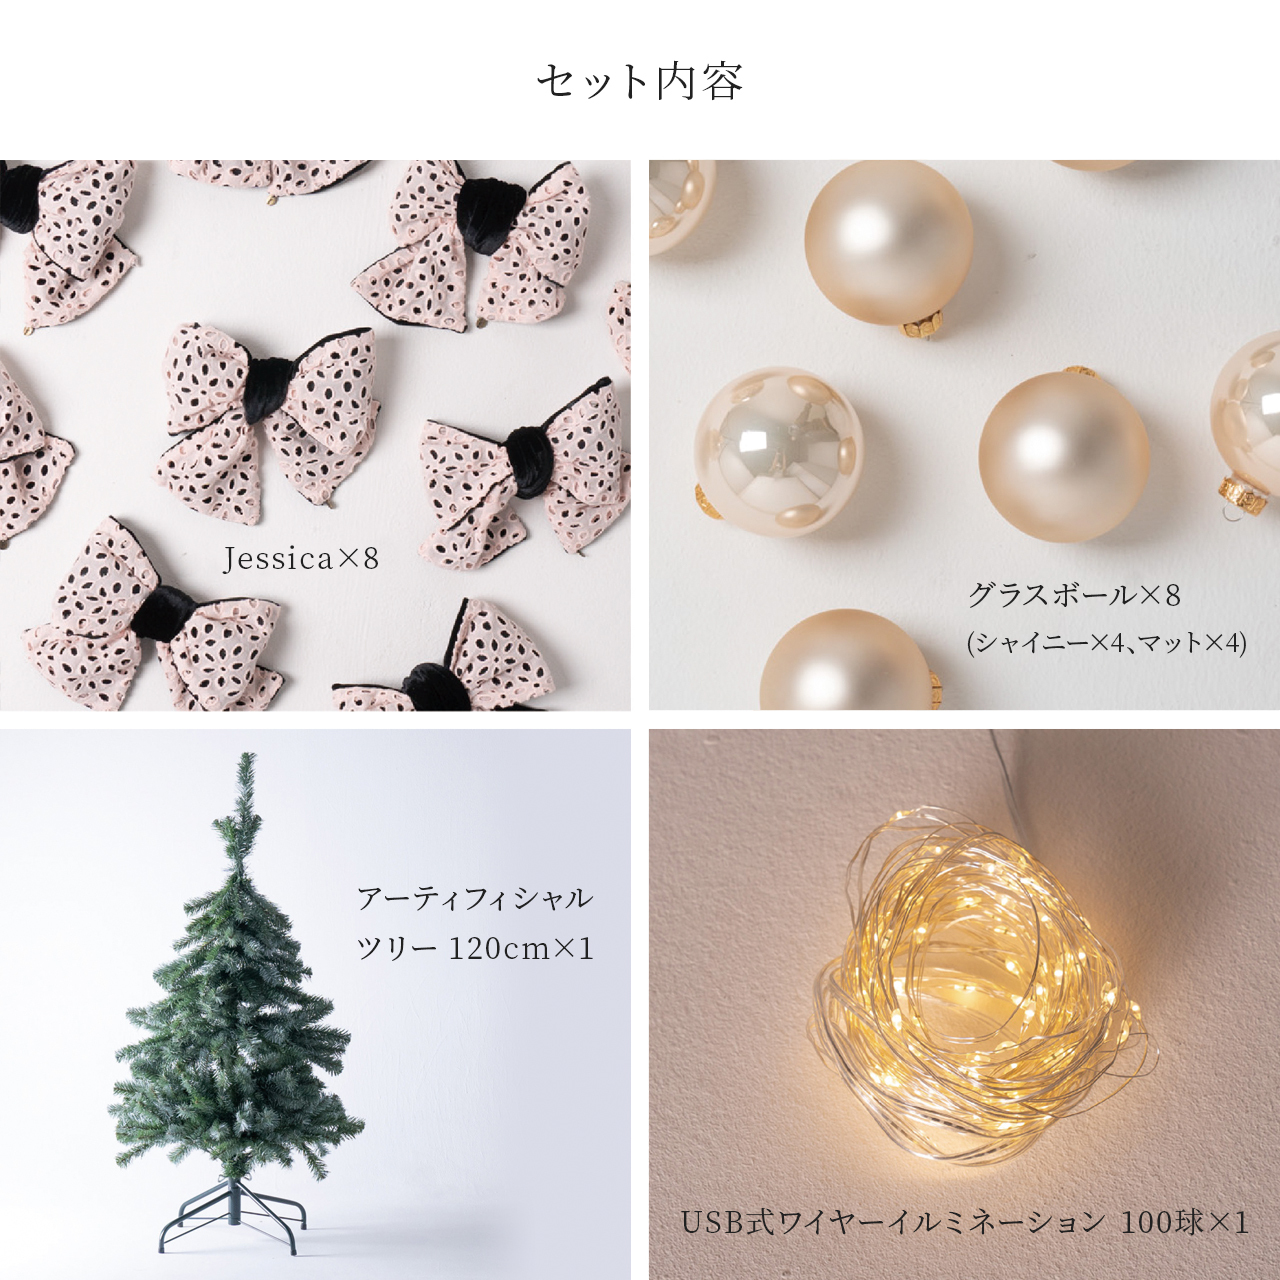 1cm ジェシカ クリスマスツリーセット Ft1 Jessica Tree Set Eyelet Lace サプライズを彩る特別なプレゼント さぷろぽ Official Store